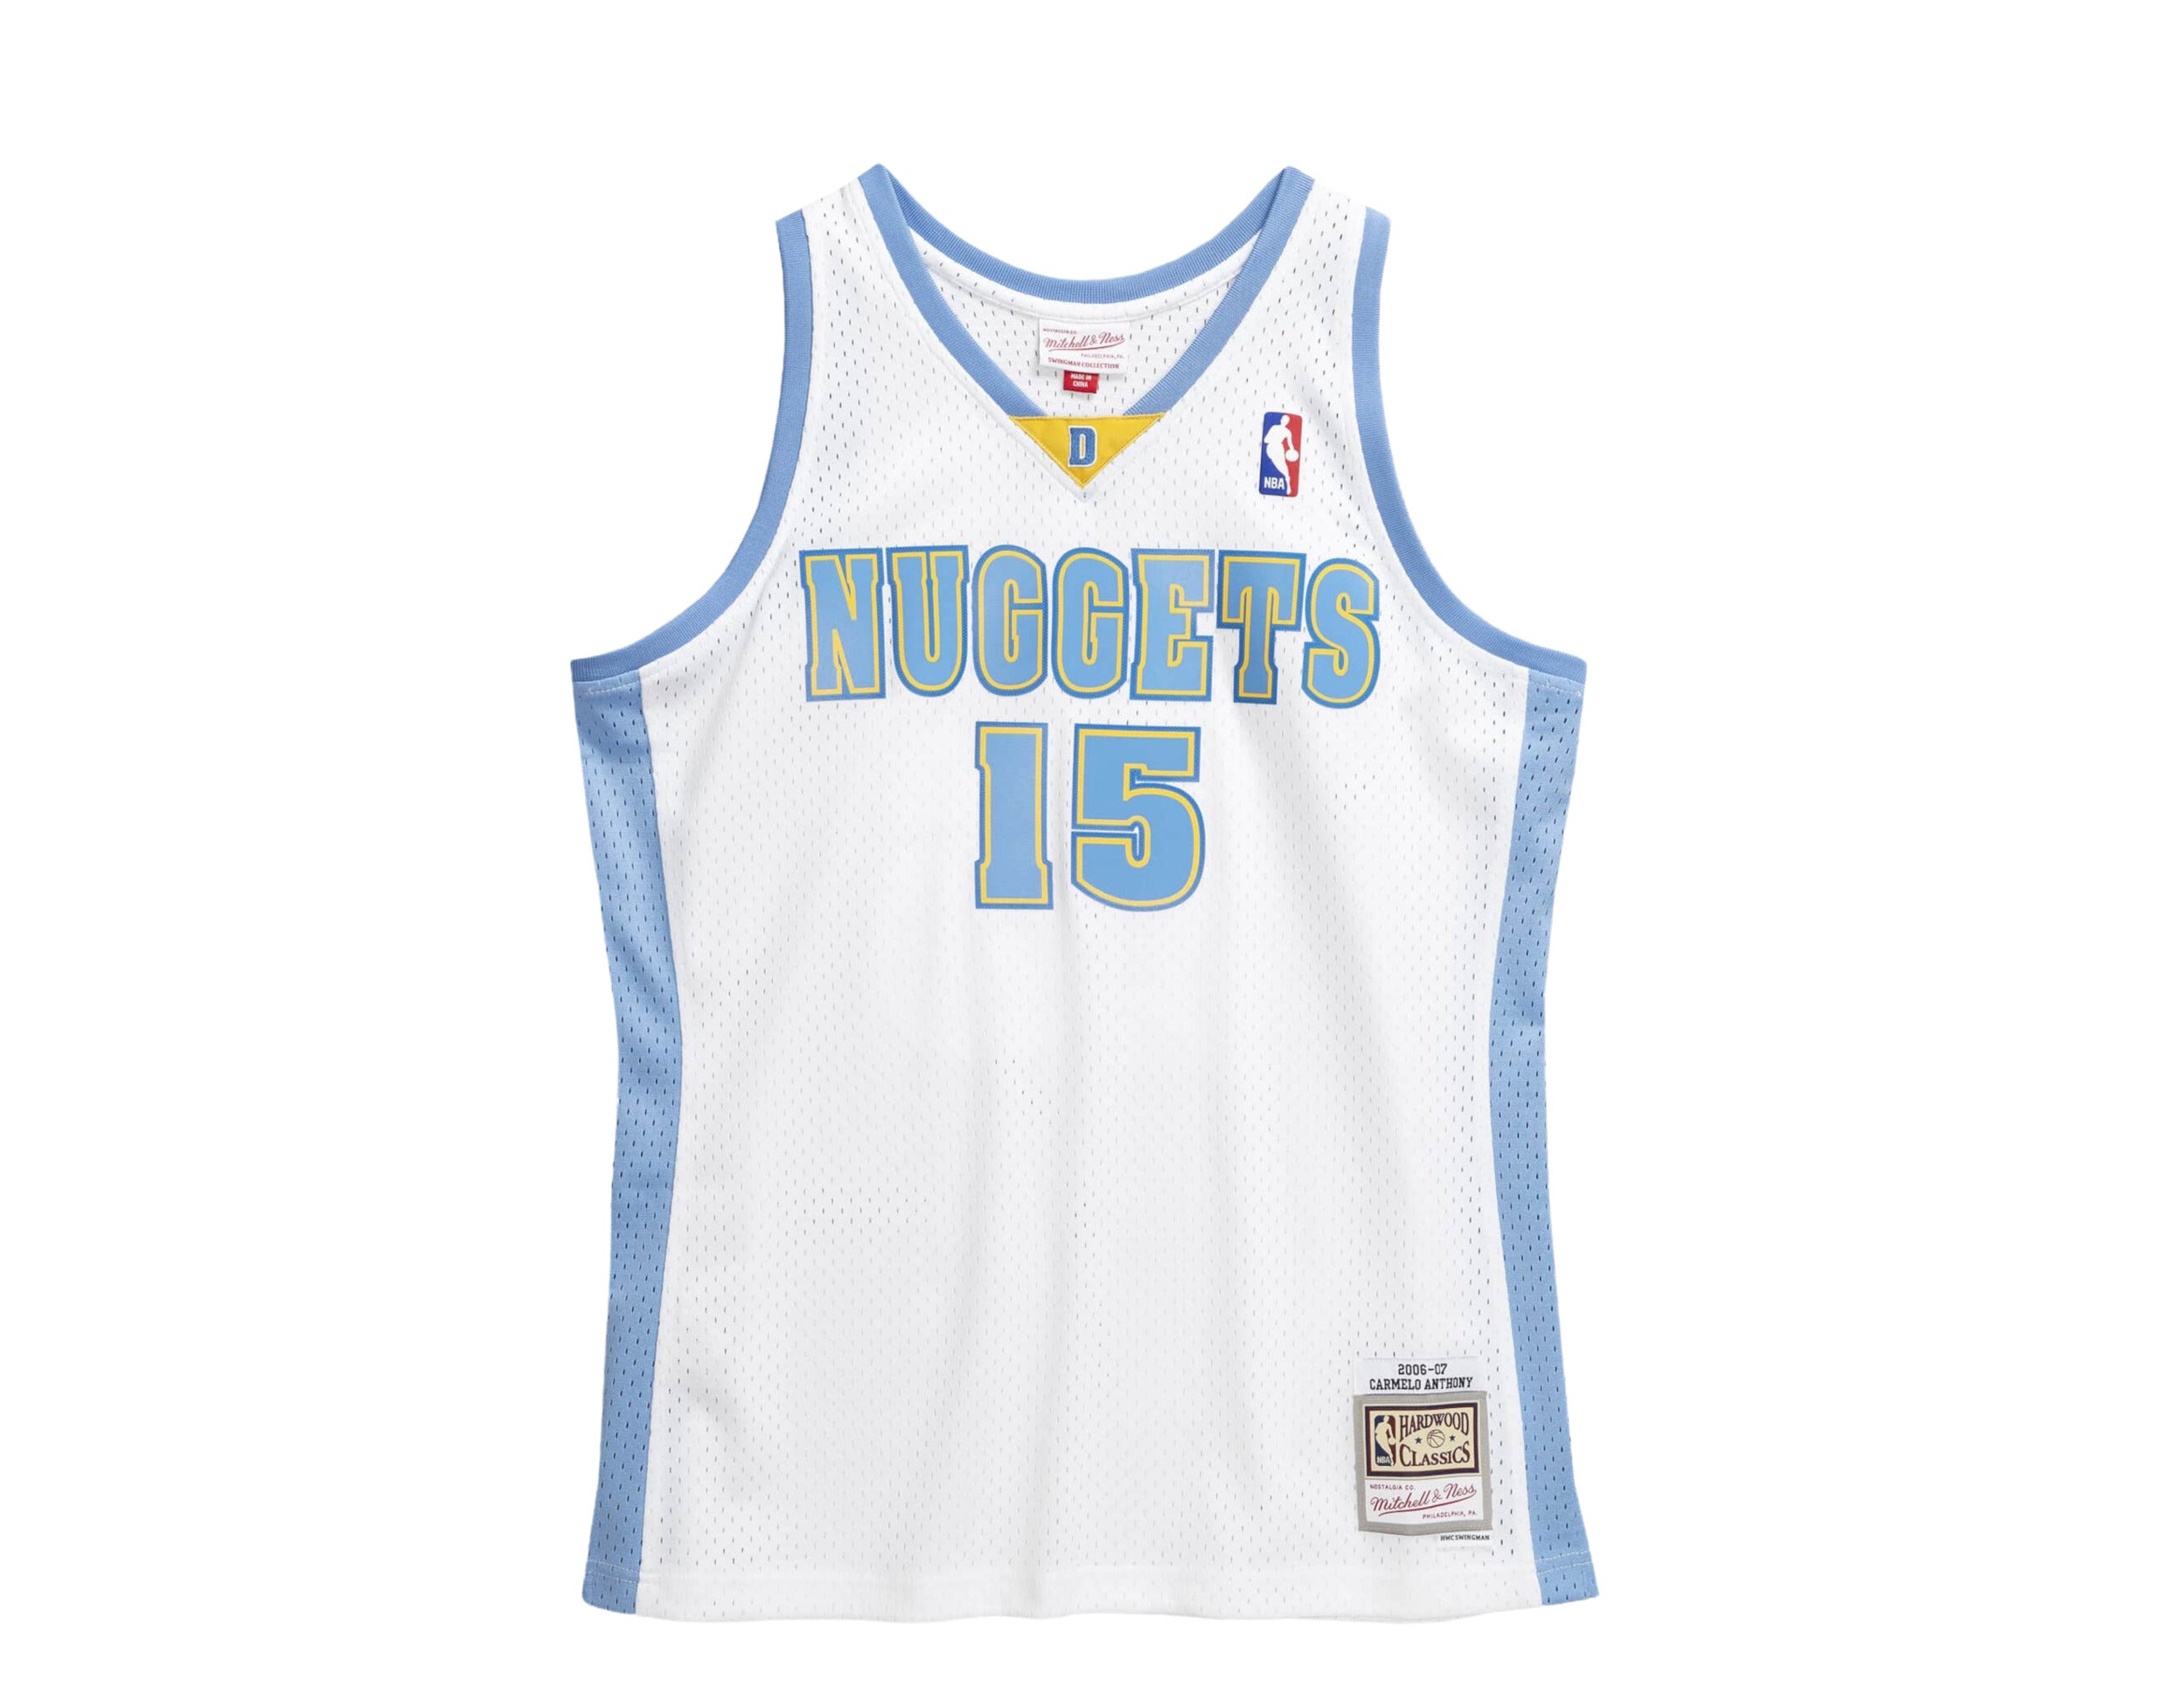 Denver Nuggets NBA *Anthony* Nike Shirt XL XL